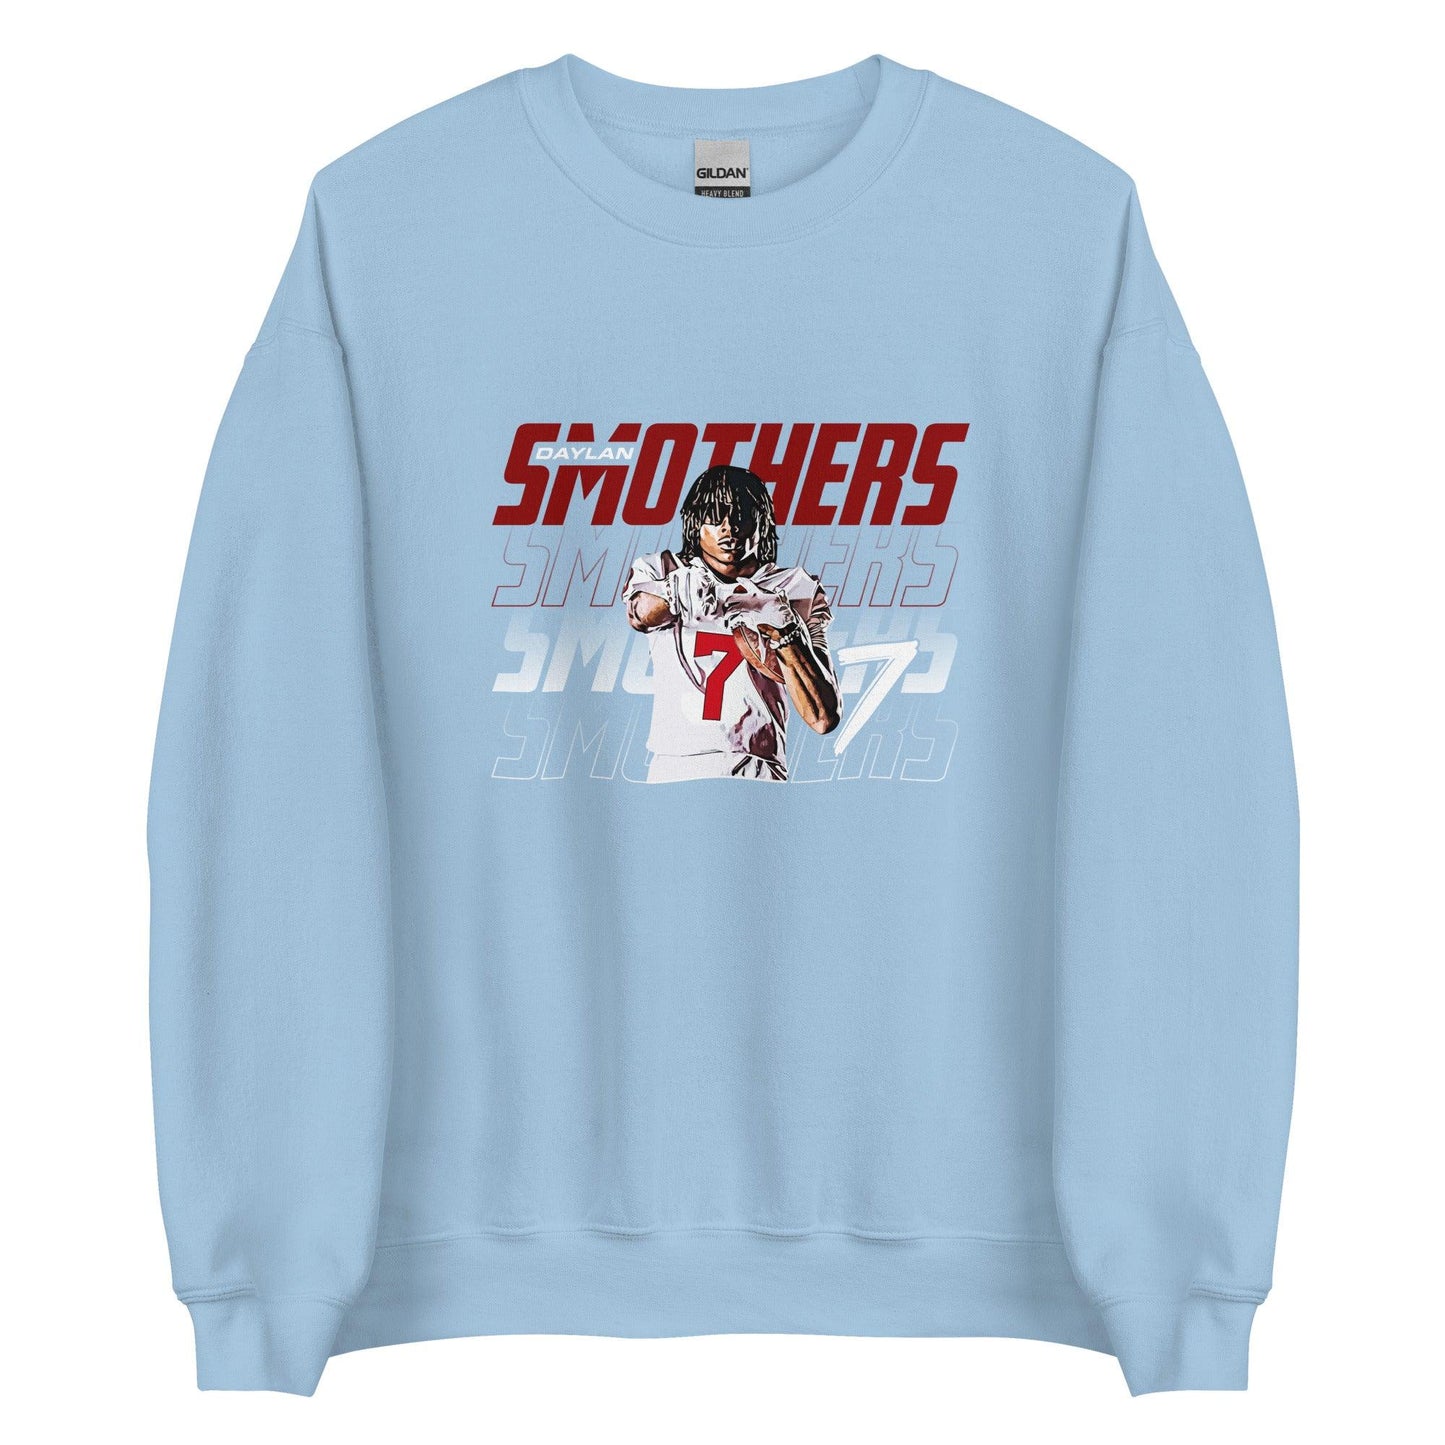 Daylan Smothers "Gameday" Sweatshirt - Fan Arch